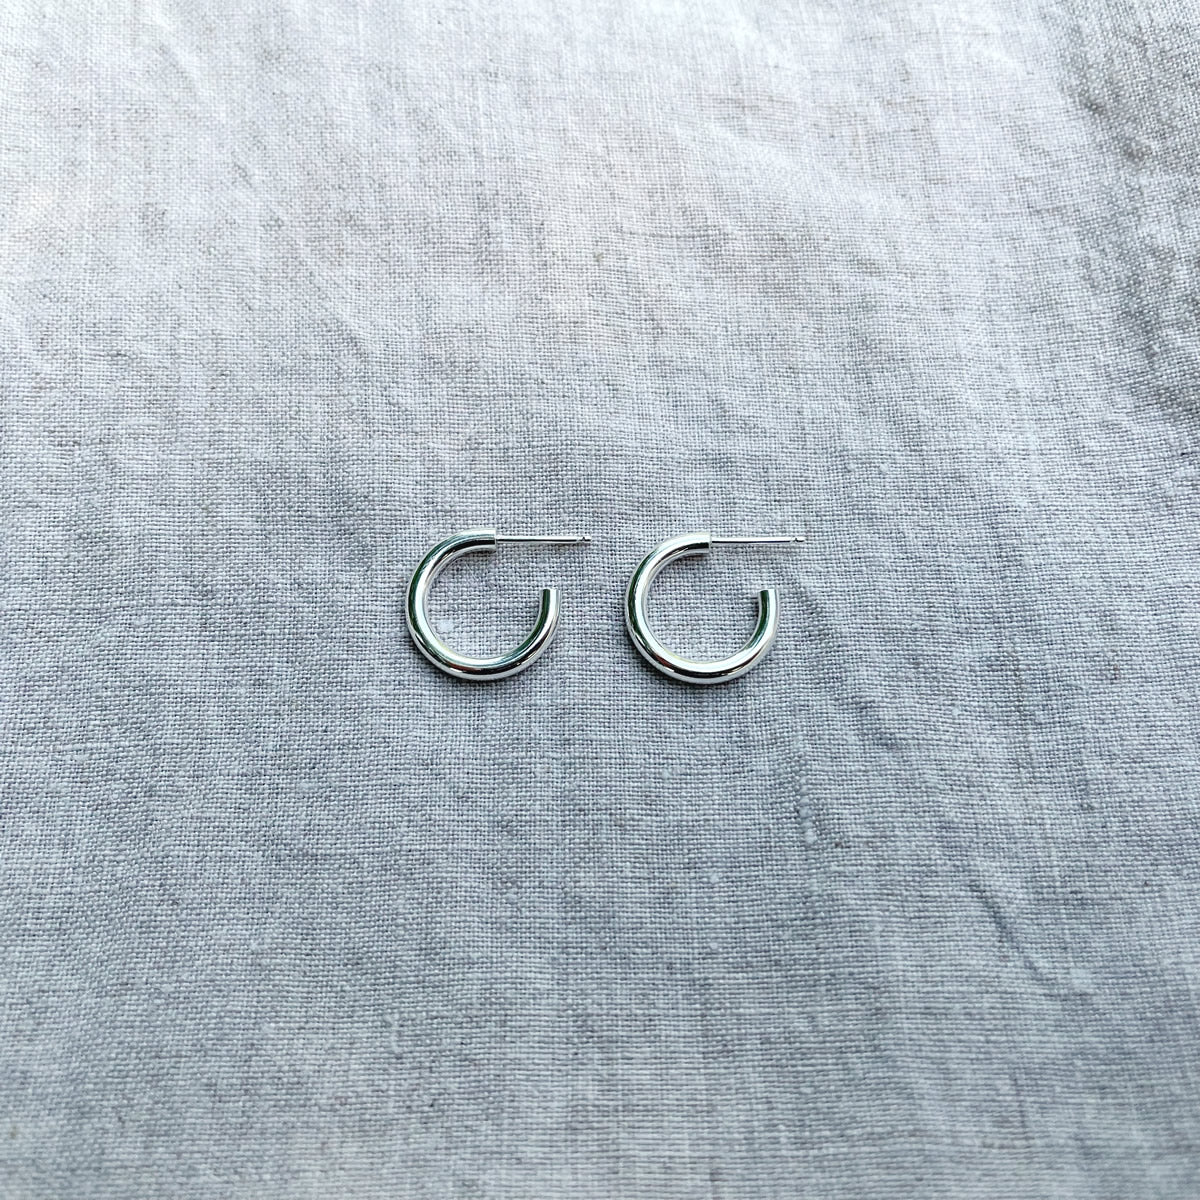 Thick Mini Hoop Earrings | Everyday Earrings in Sterling Silver or 14K Gold Fill Sterling Silver